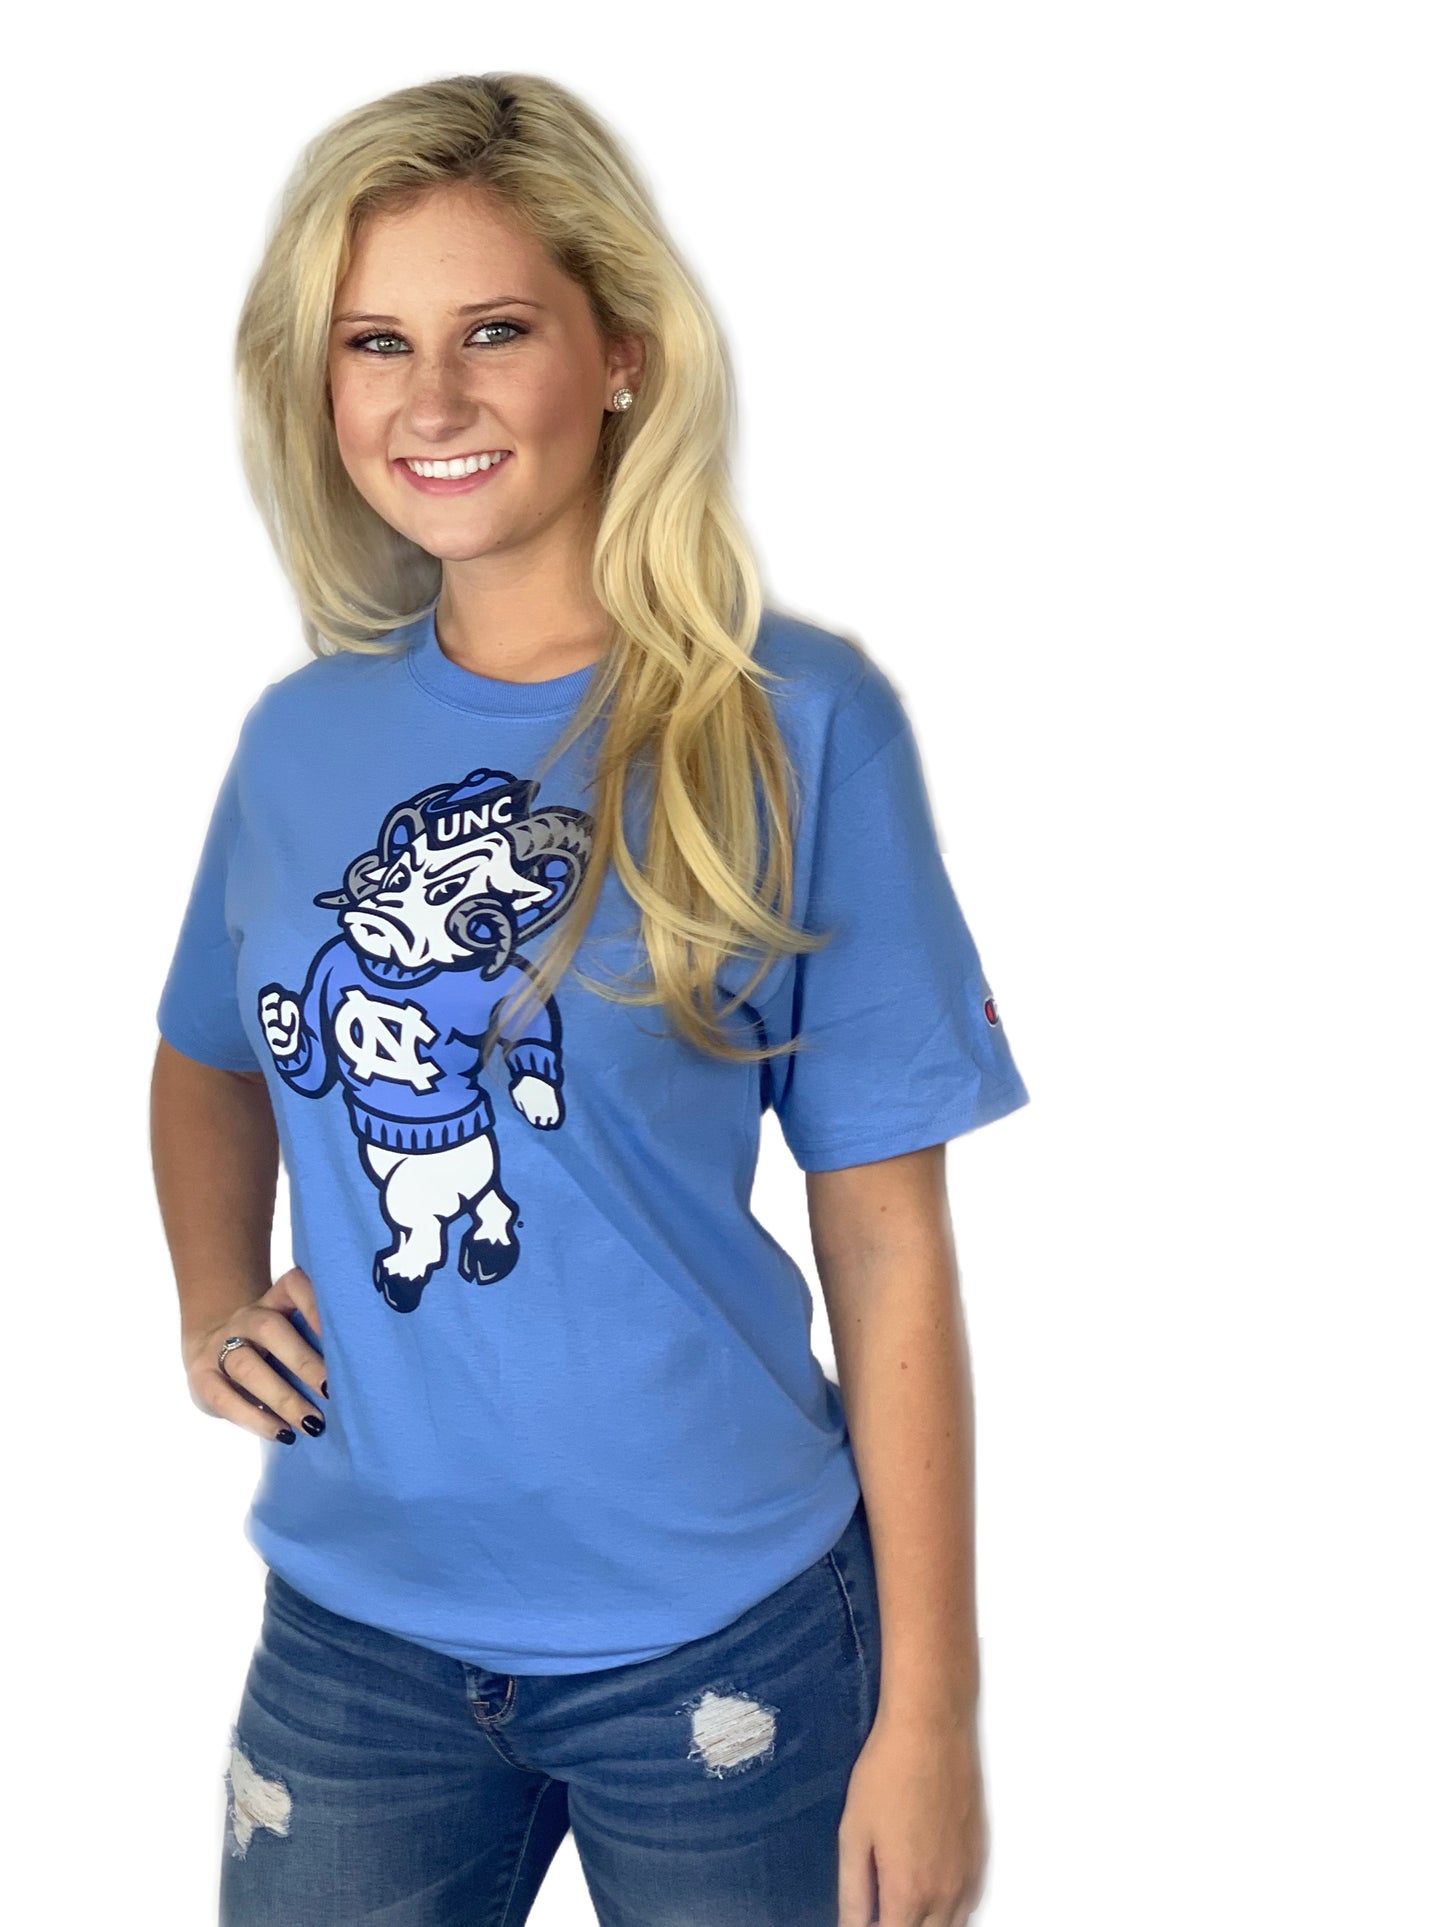 Champion Arched Carolina UNC Sweatshirt - The Shrunken Head Carolina Blue / L